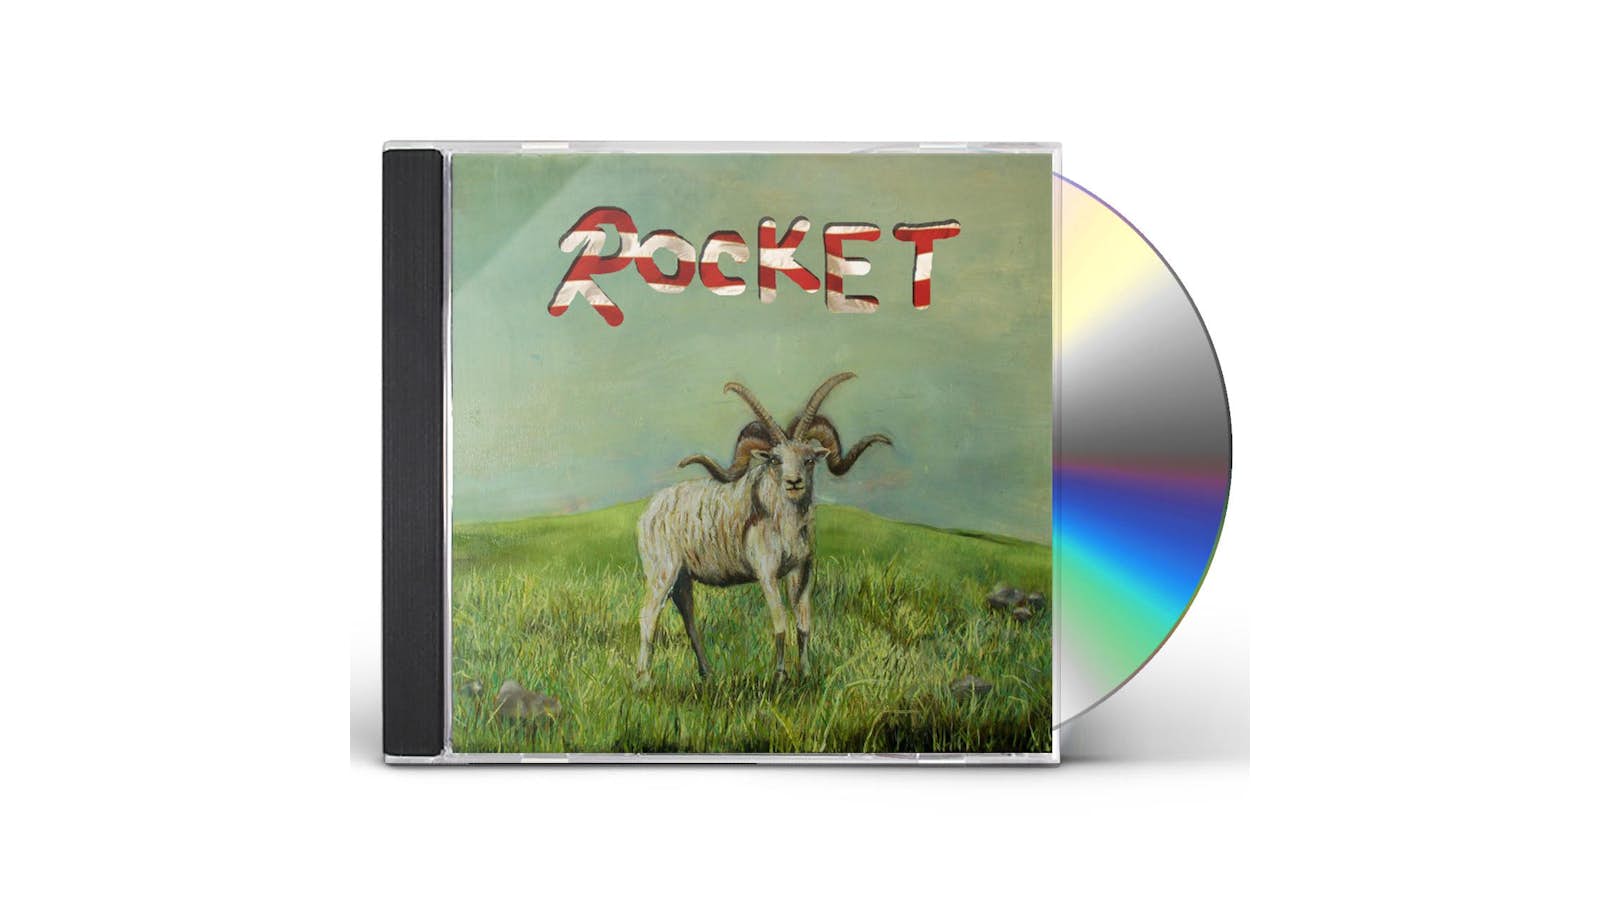 ALBUM REVIEW: (Sandy) Alex G — Rocket, by Sam Reynolds